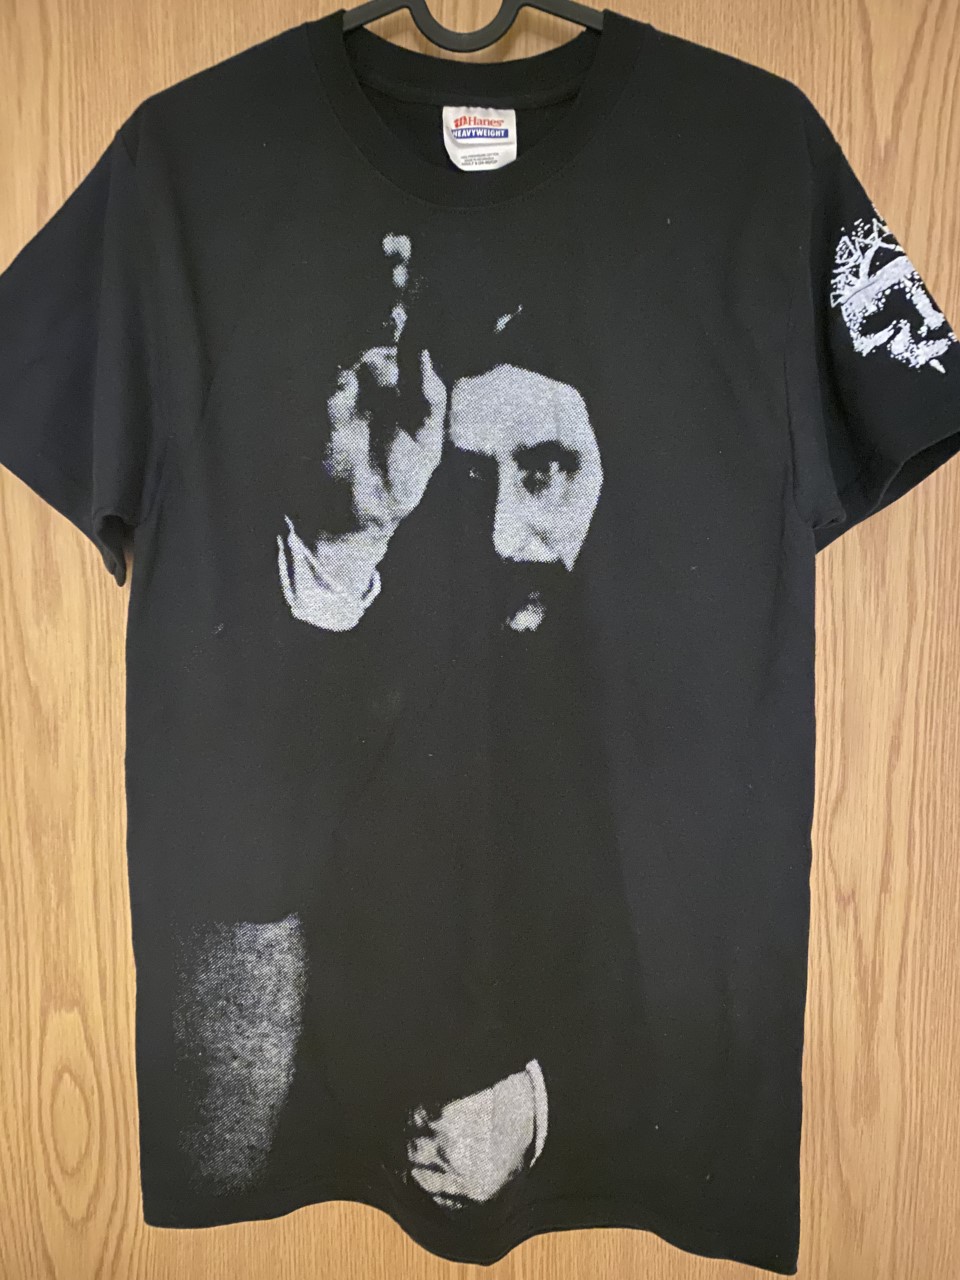 Integrity - Rasputin Hated of the World - Small Shirt